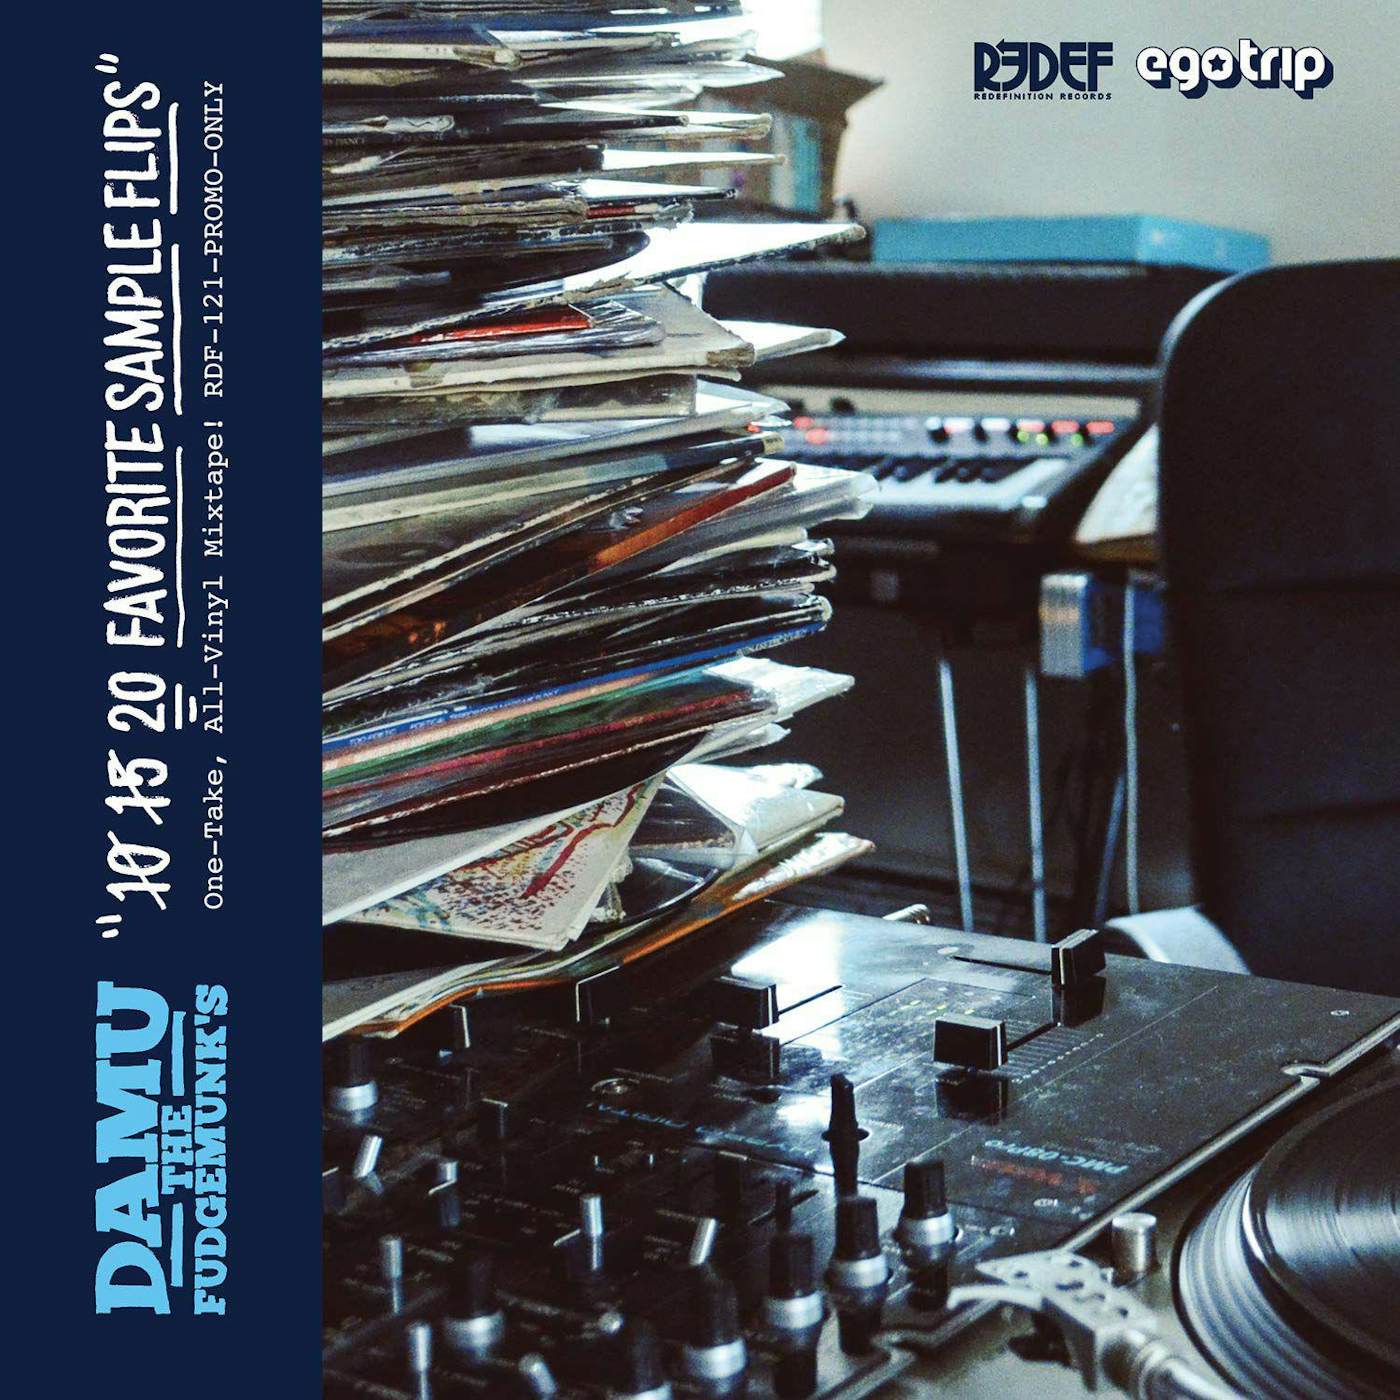  Damu the Fudgemunk's 20 Favorite Sample Flips Vinyl Record